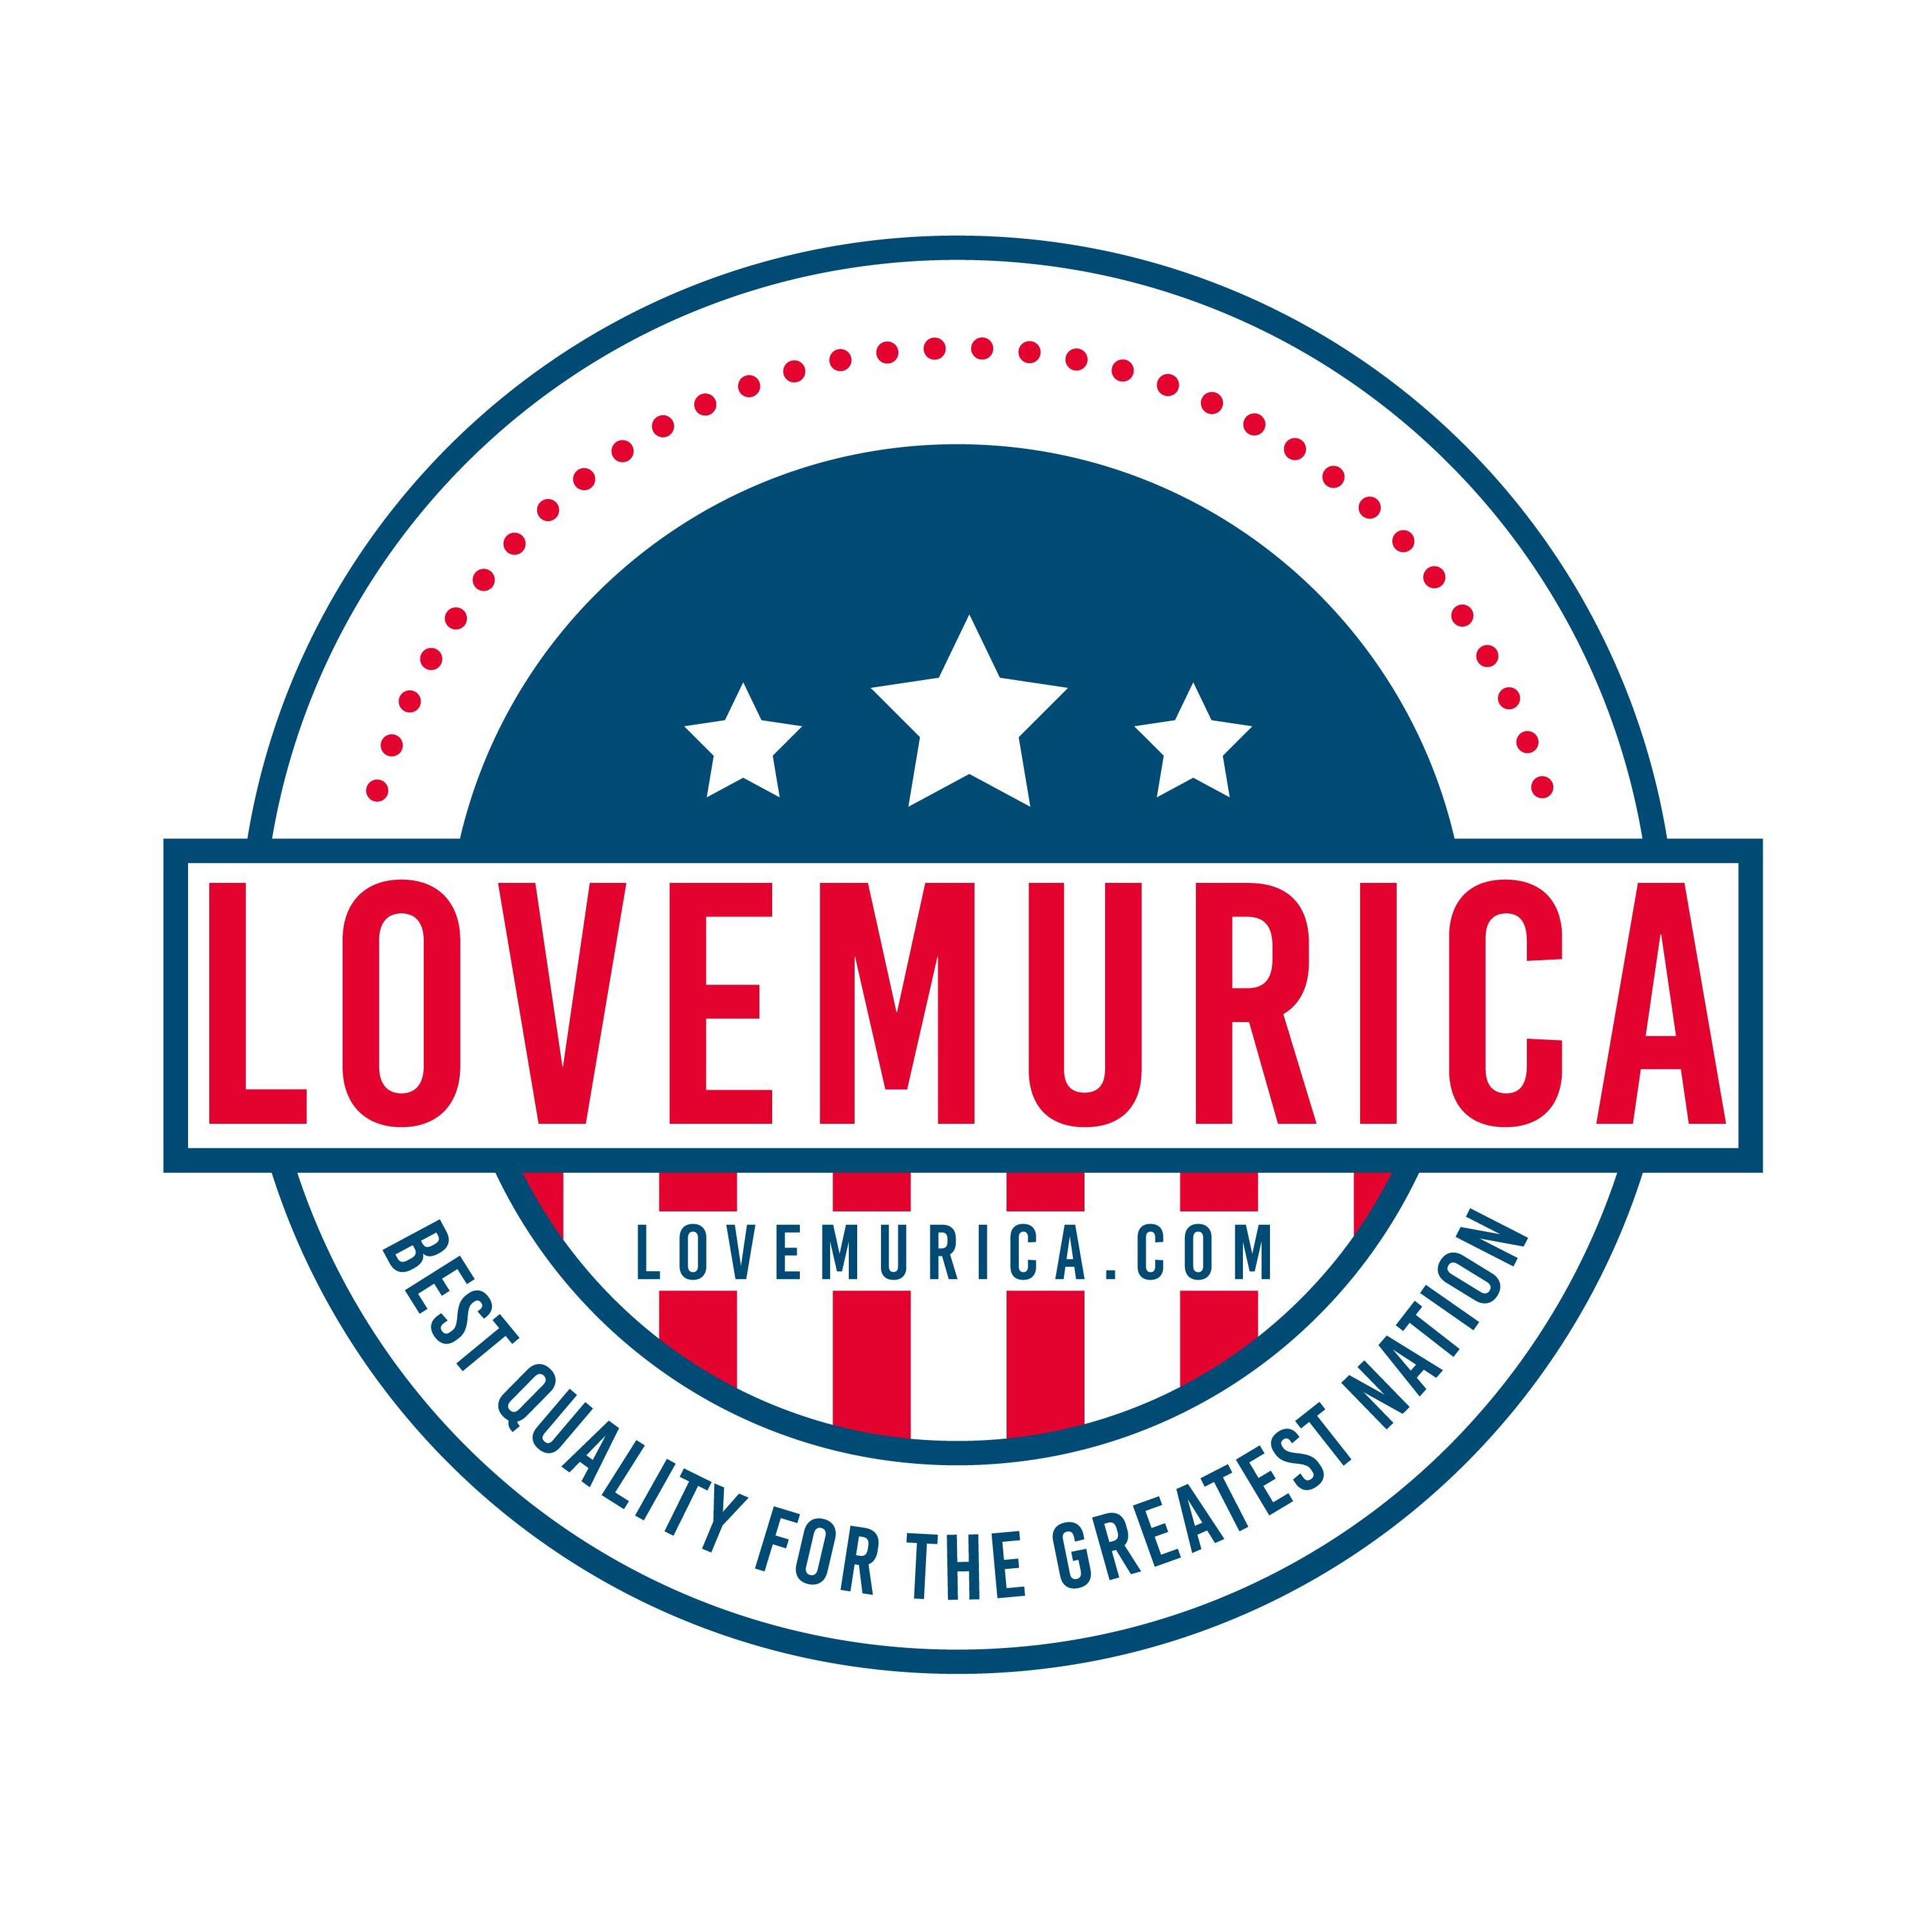 Trademark Logo LOVEMURICA LOVEMURICA.COM BEST QUALITY FOR THE GREATEST NATION